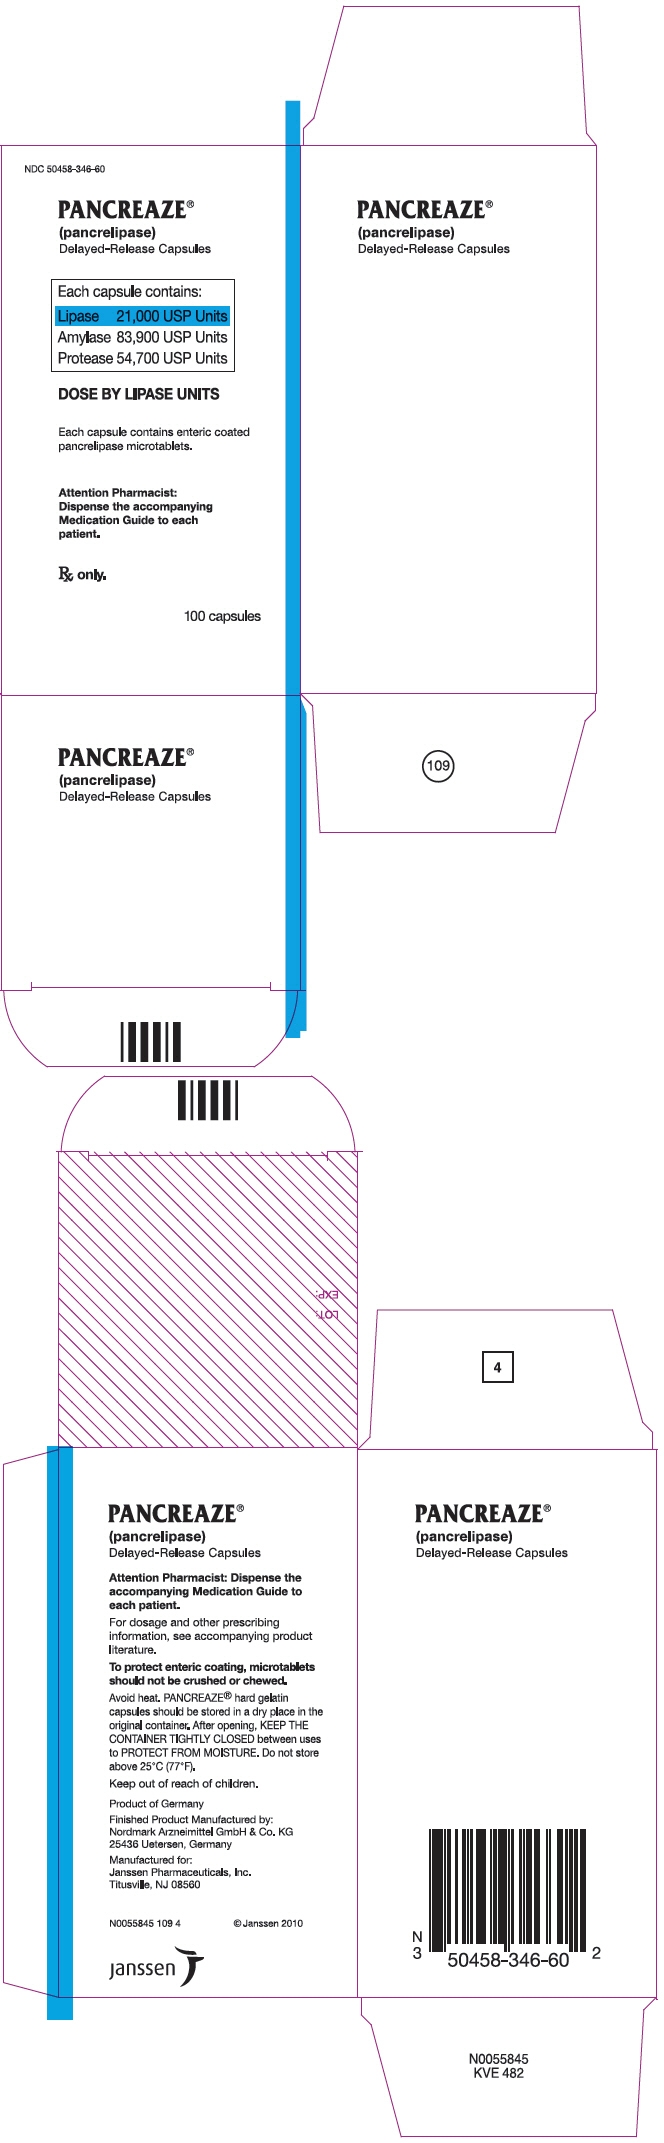 PRINCIPAL DISPLAY PANEL - 21,000 USP Unit Capsule Bottle Carton